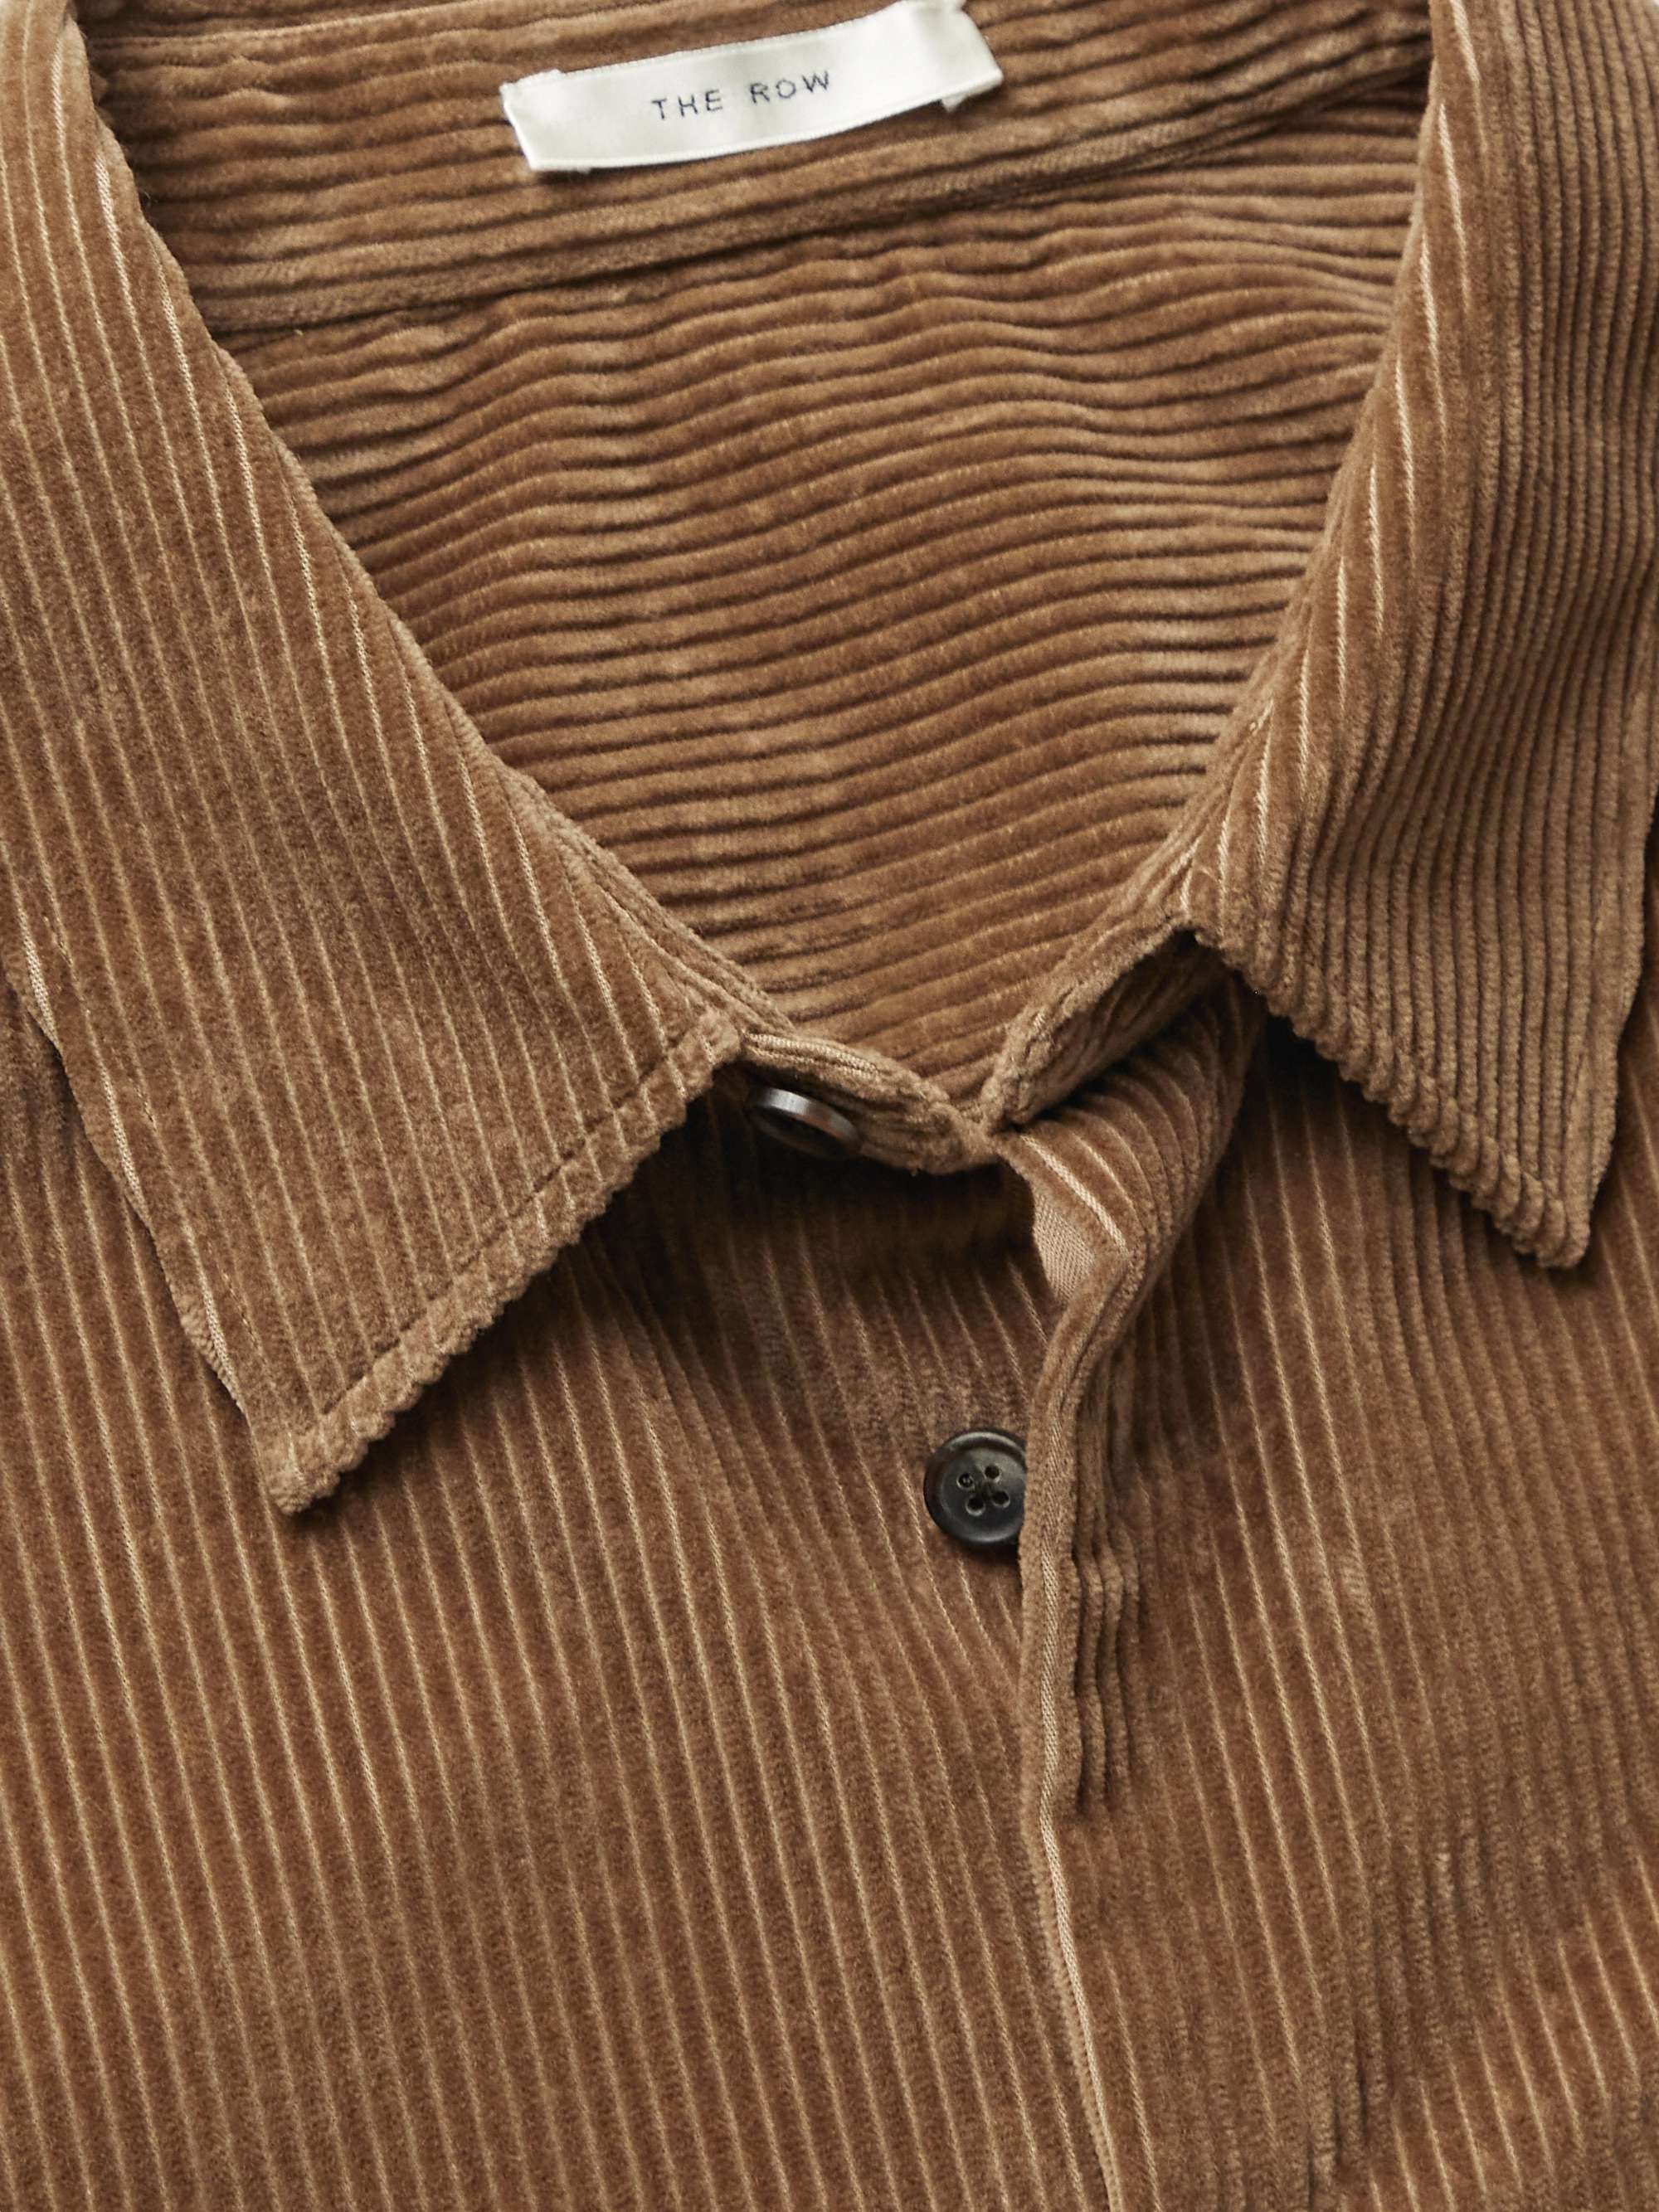 THE ROW Beto Cotton-Corduroy Shirt